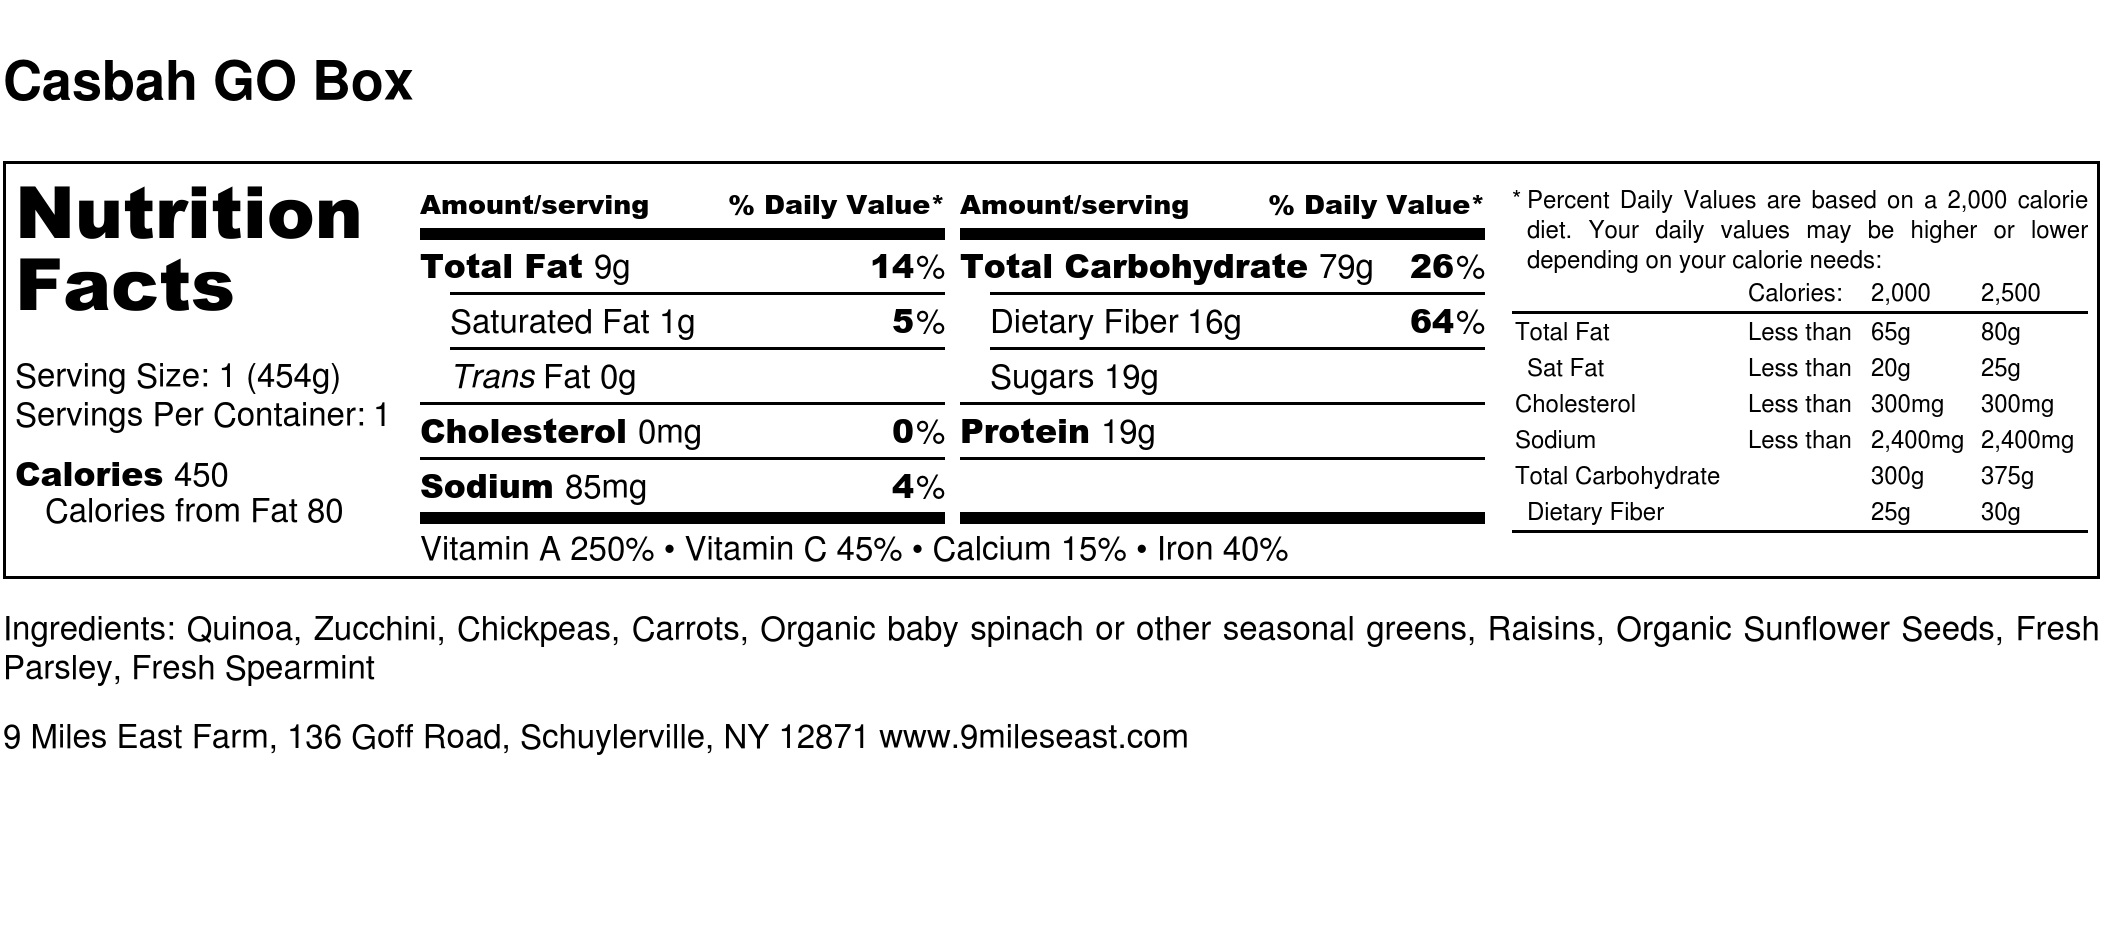 Casbah GO Box - Nutrition Label.jpg